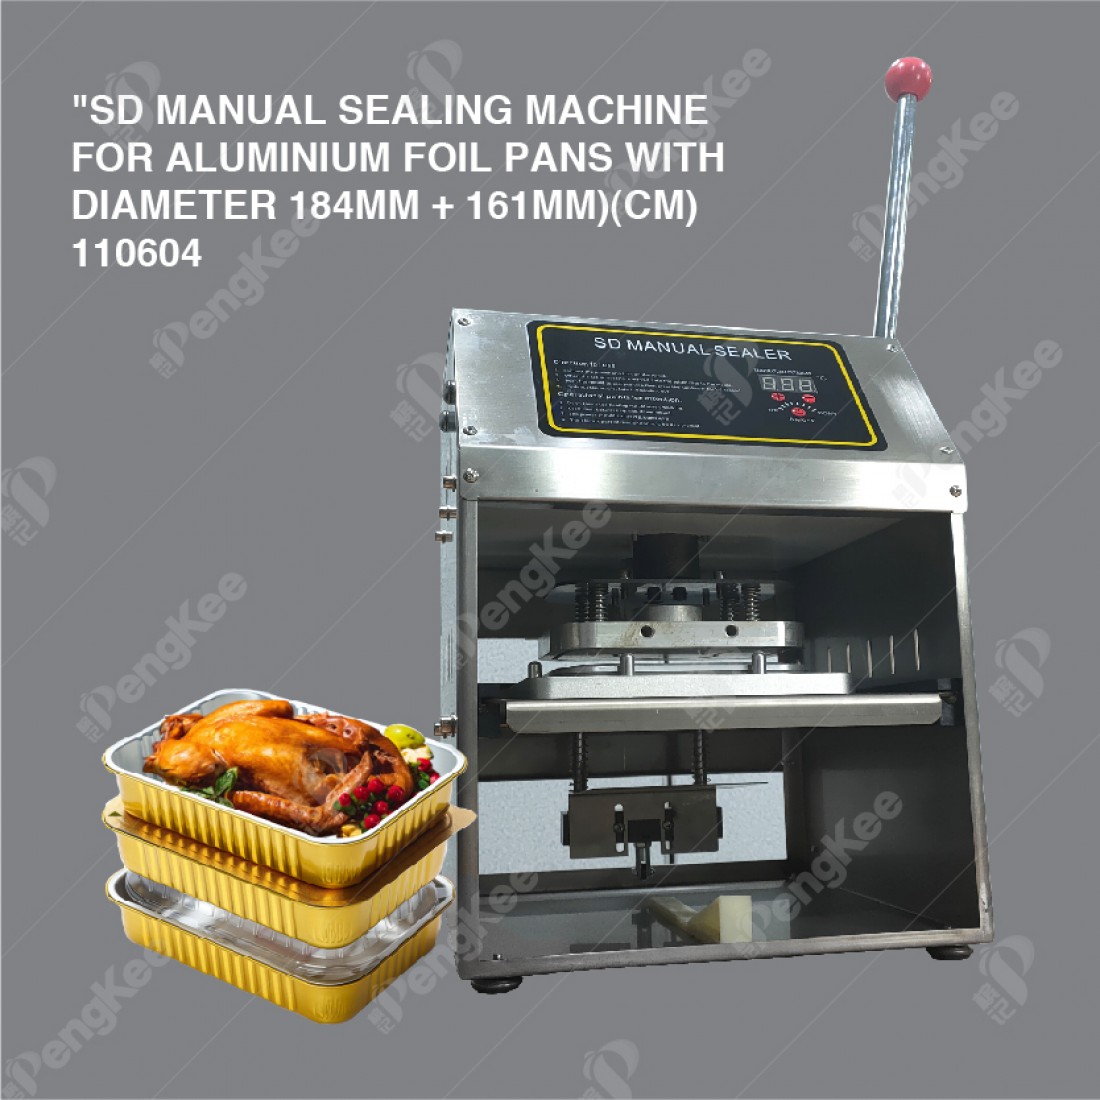 SD MANUAL SEALING MACHINE FOR ALUMINIUM FOIL PANS WITH DIAMETER 184MM + 161MM)(CM)